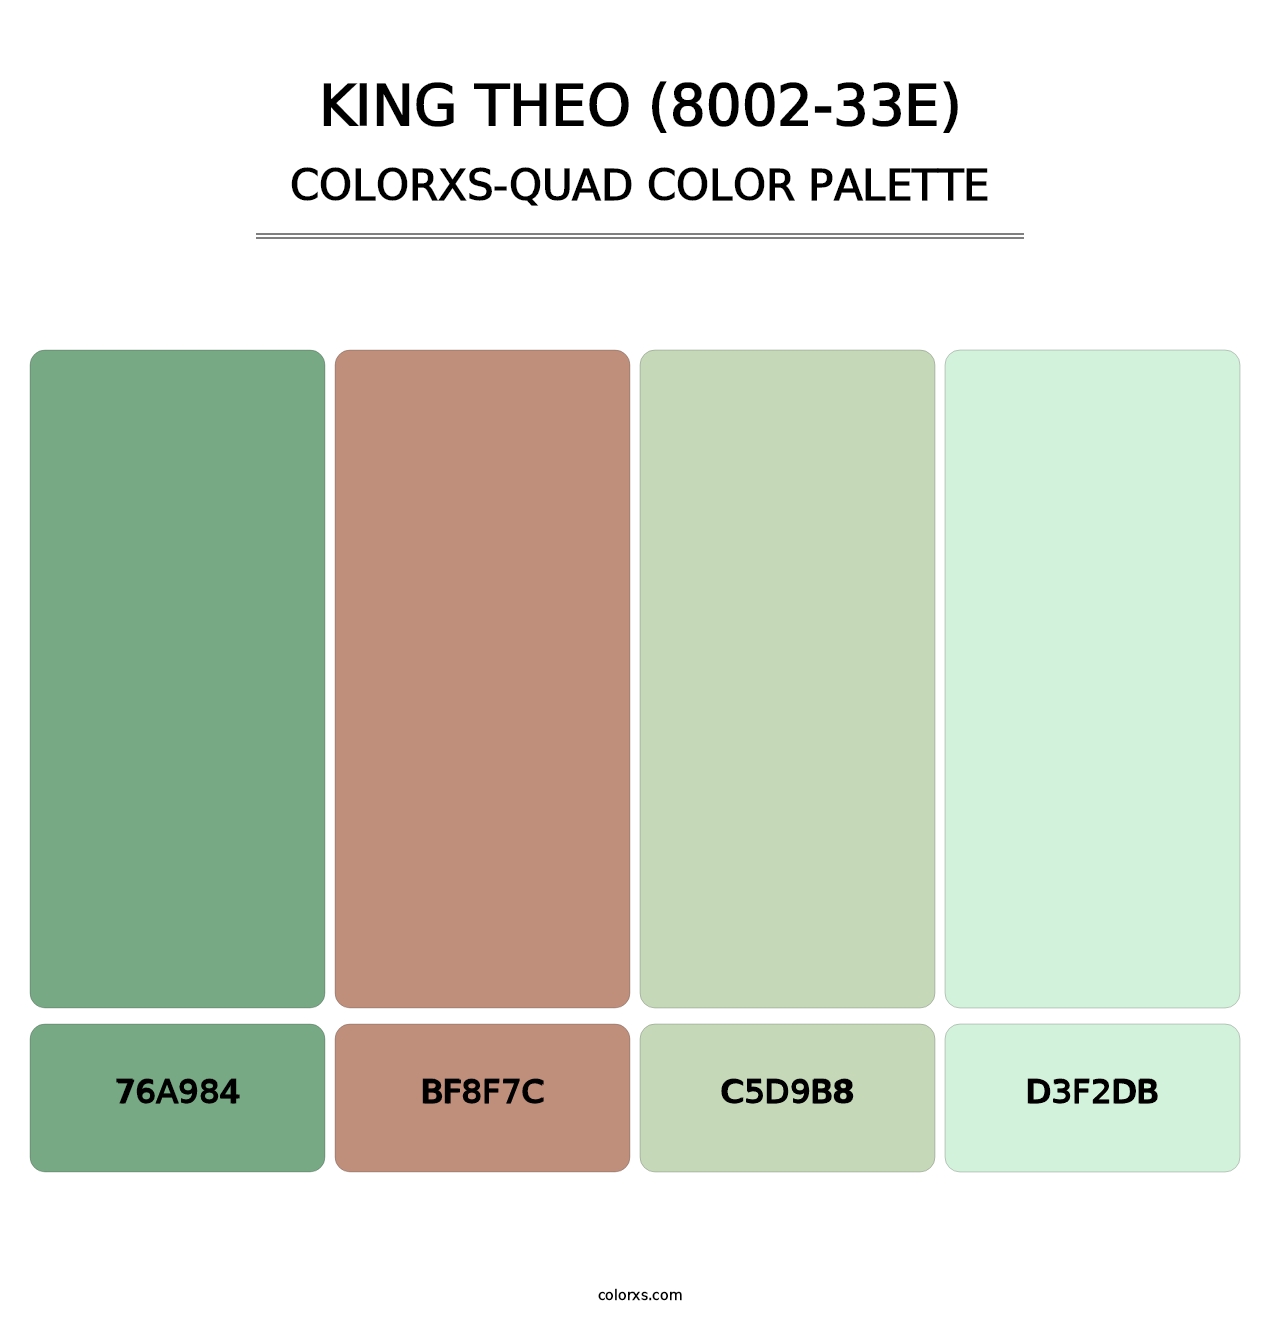 King Theo (8002-33E) - Colorxs Quad Palette